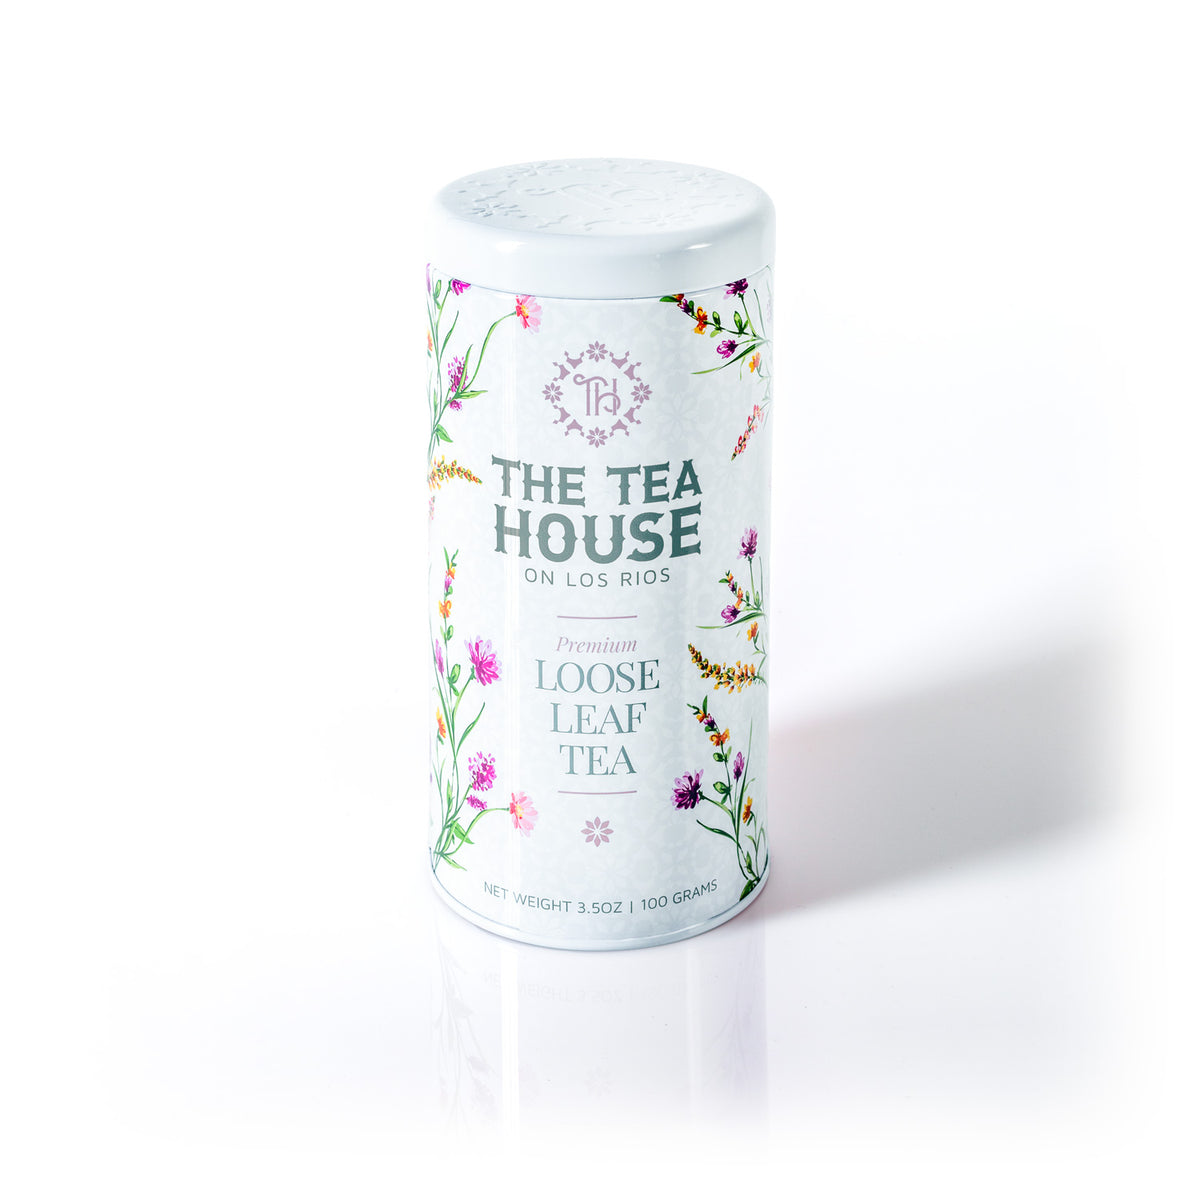 The Tea House on Los Rios unveils a 100g Loose Leaf Tea Tin